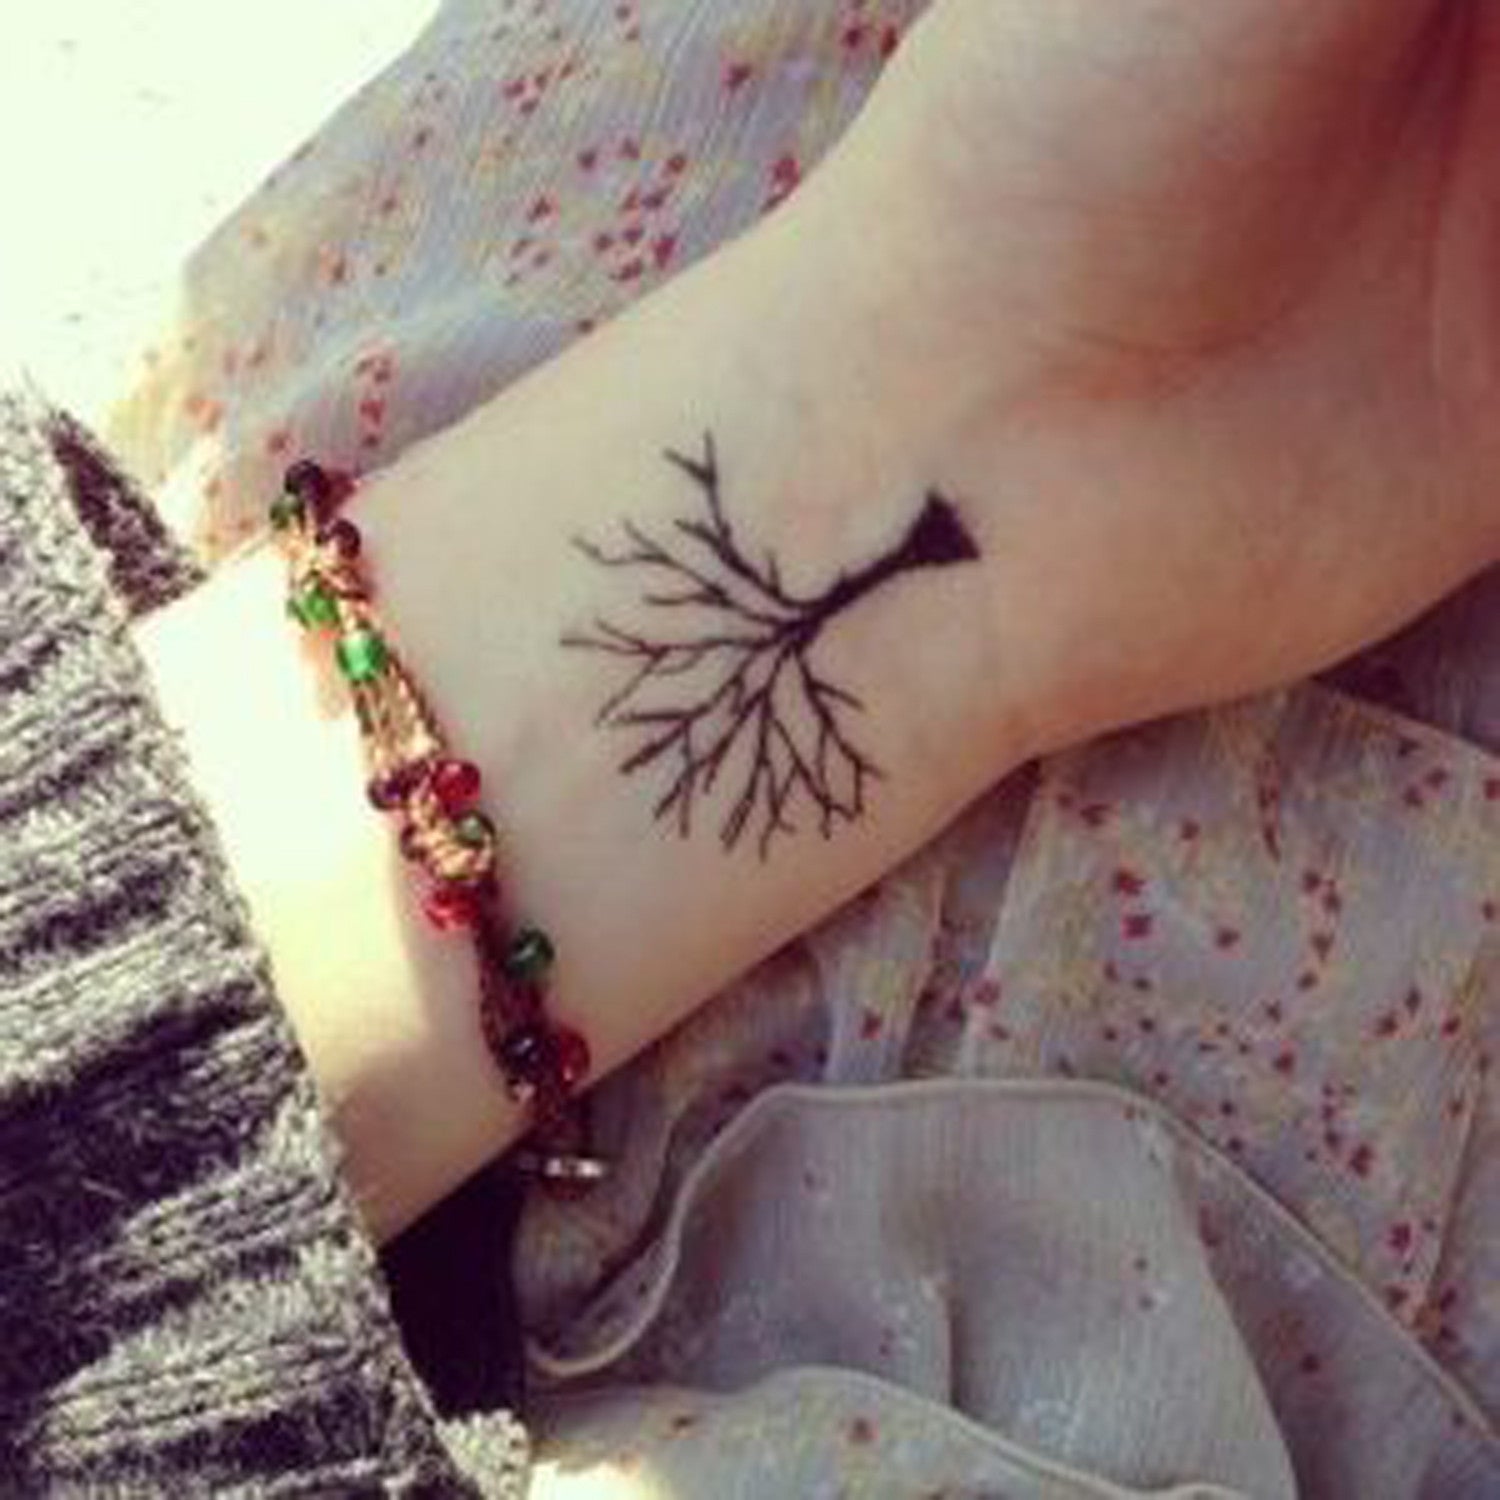 Simple Minimalistic Oak Tree No Leaves Tattoos for Women Ideas at MyBodiArt.com